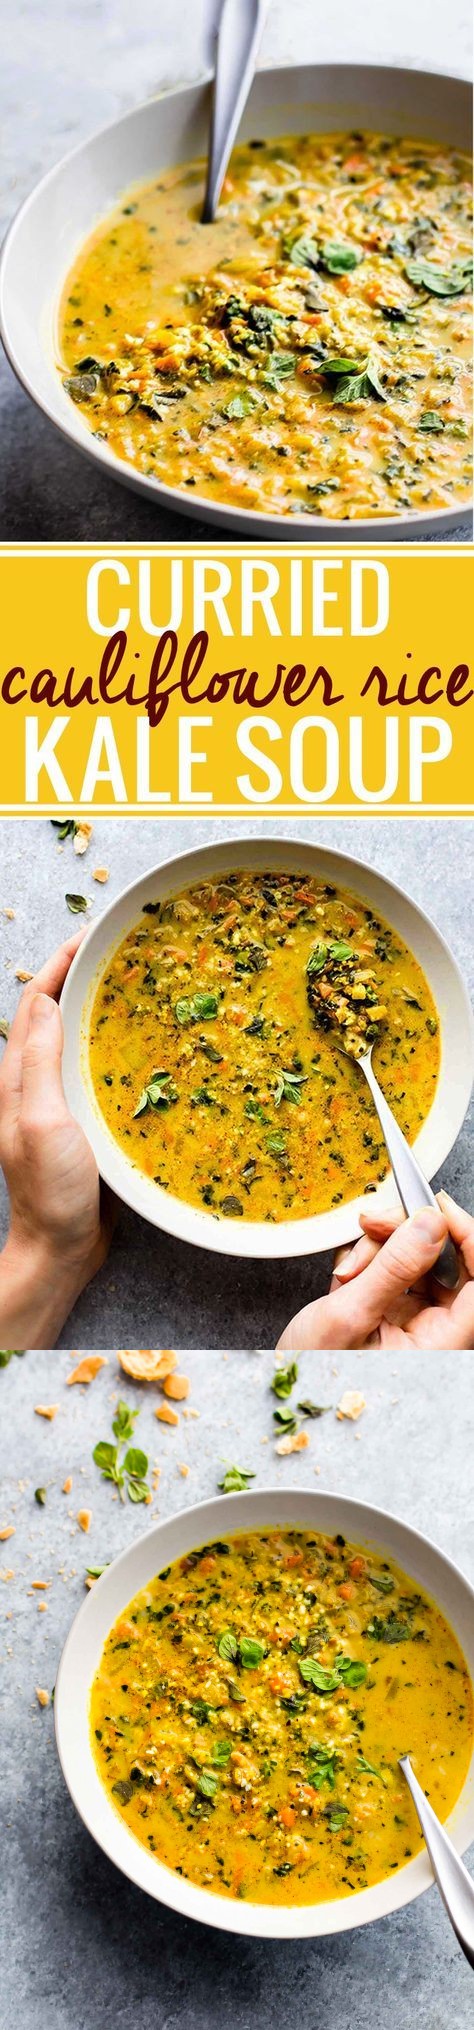 Curried Cauliflower Rice Kale Soup (Paleo, Vegan Friendly